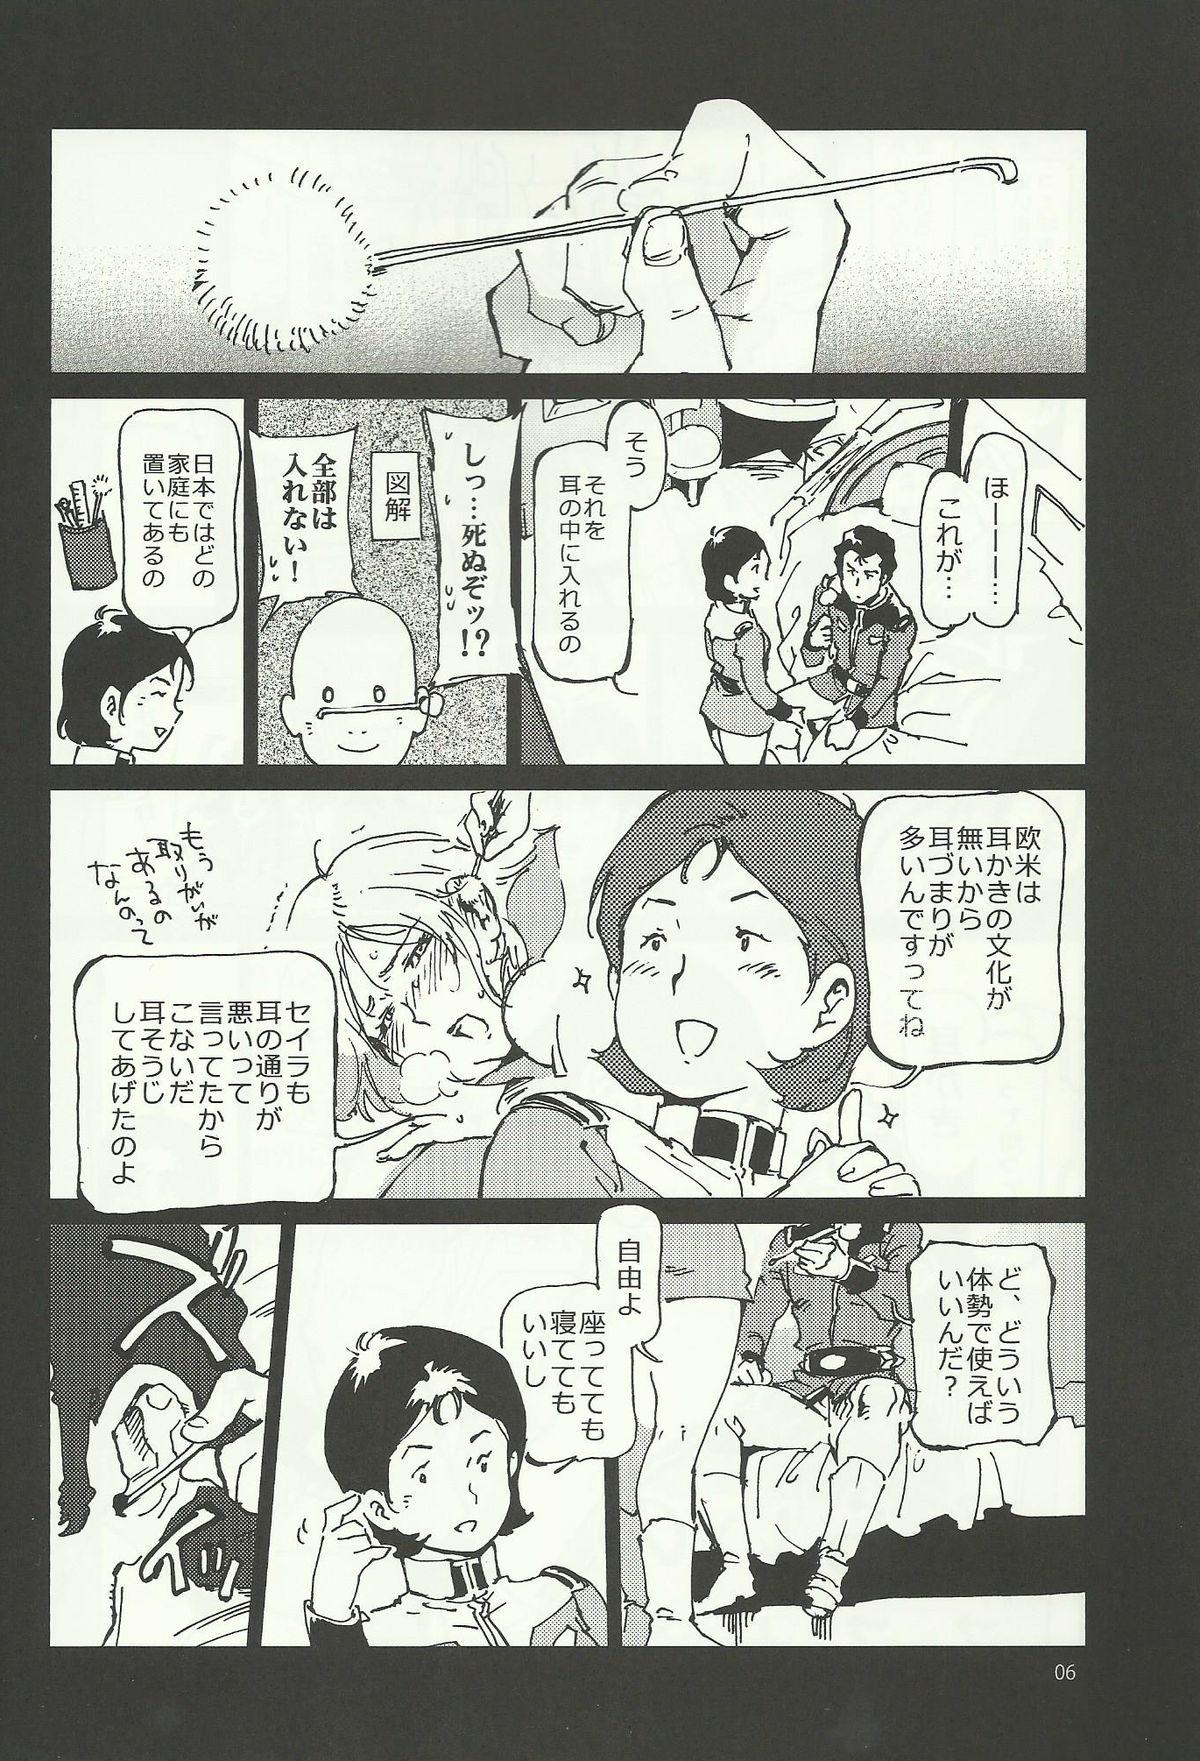 Striptease Mirai no Mimikaki - Mobile suit gundam And - Page 5